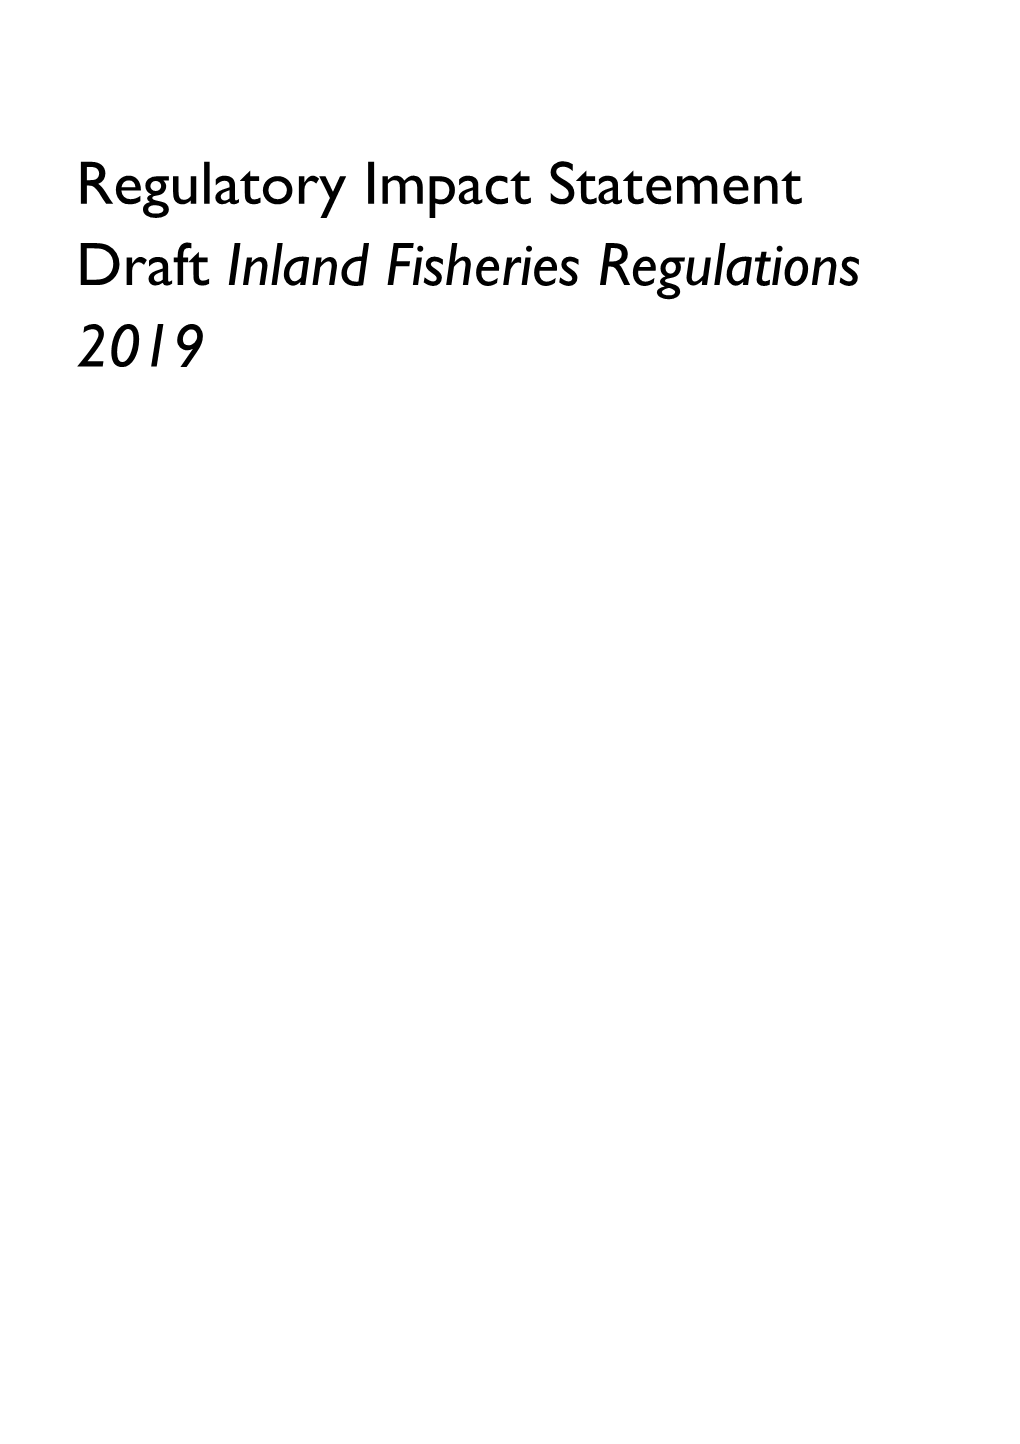 Regulatory Impact Statement Draft Inland Fisheries Regulations 2019 Regulatory Impact Statement Draft Inland Fisheries Regulations 2019 (V12)